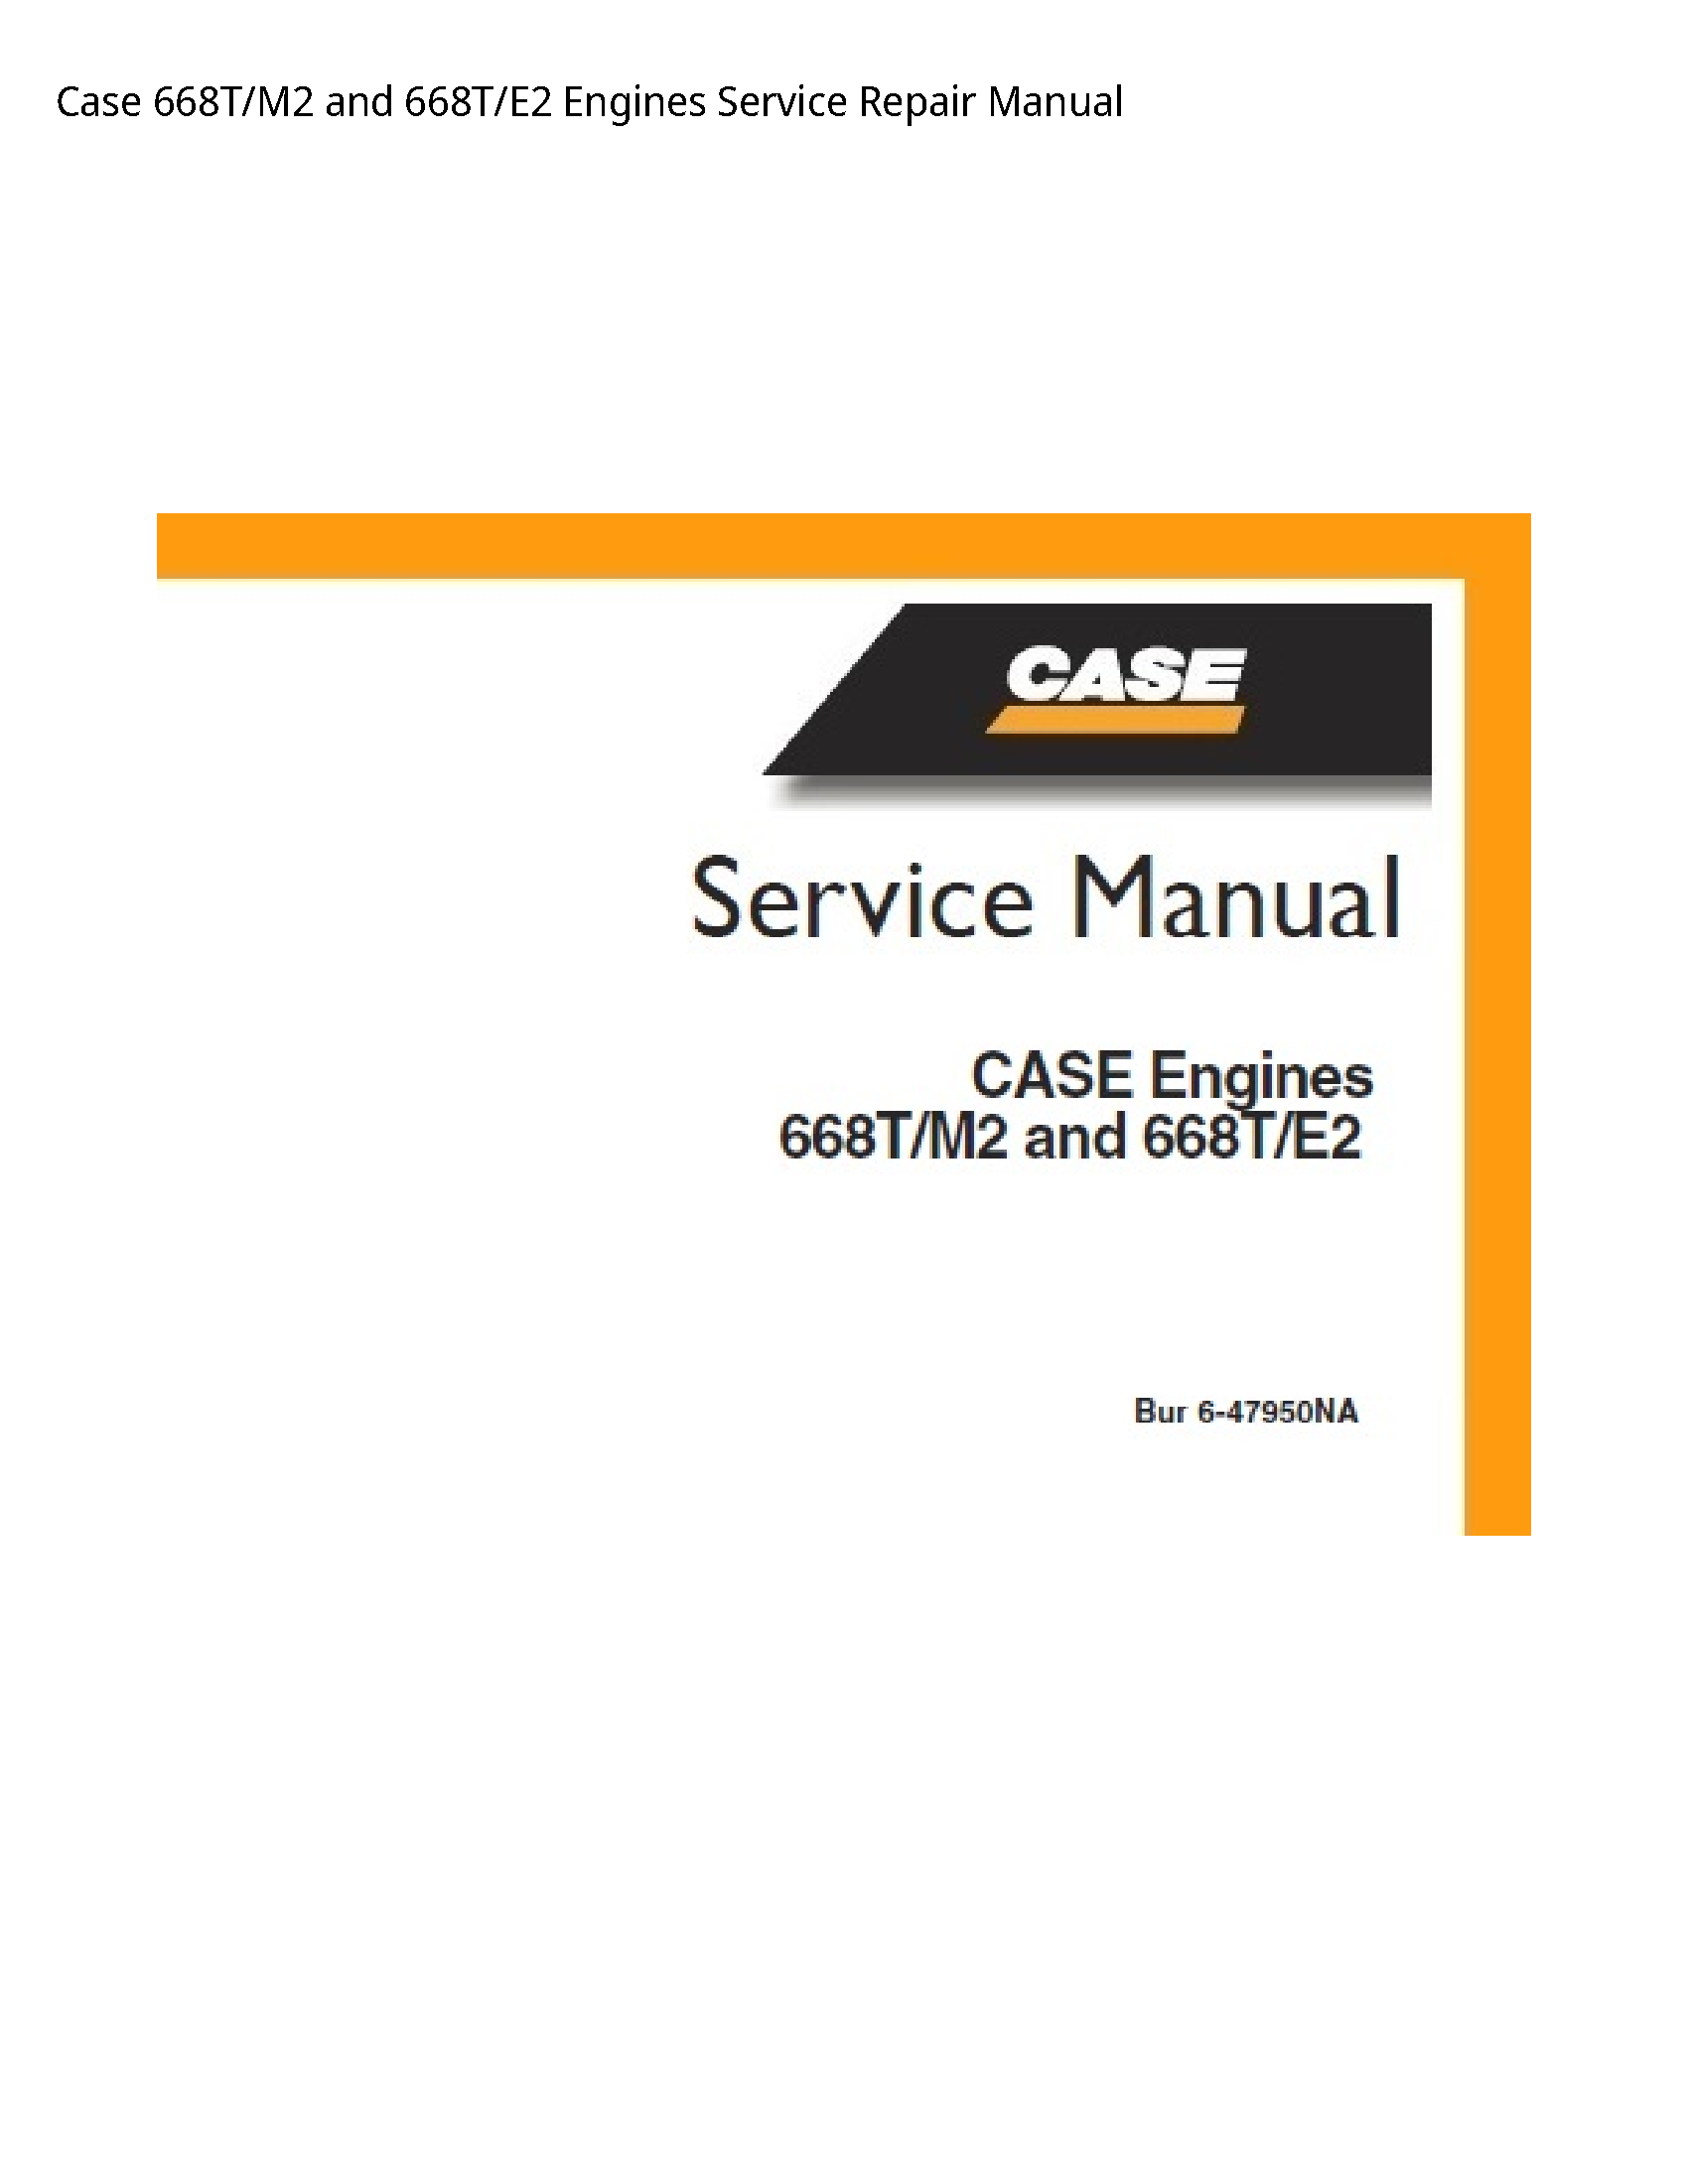 Case/Case IH 668T  Engines manual